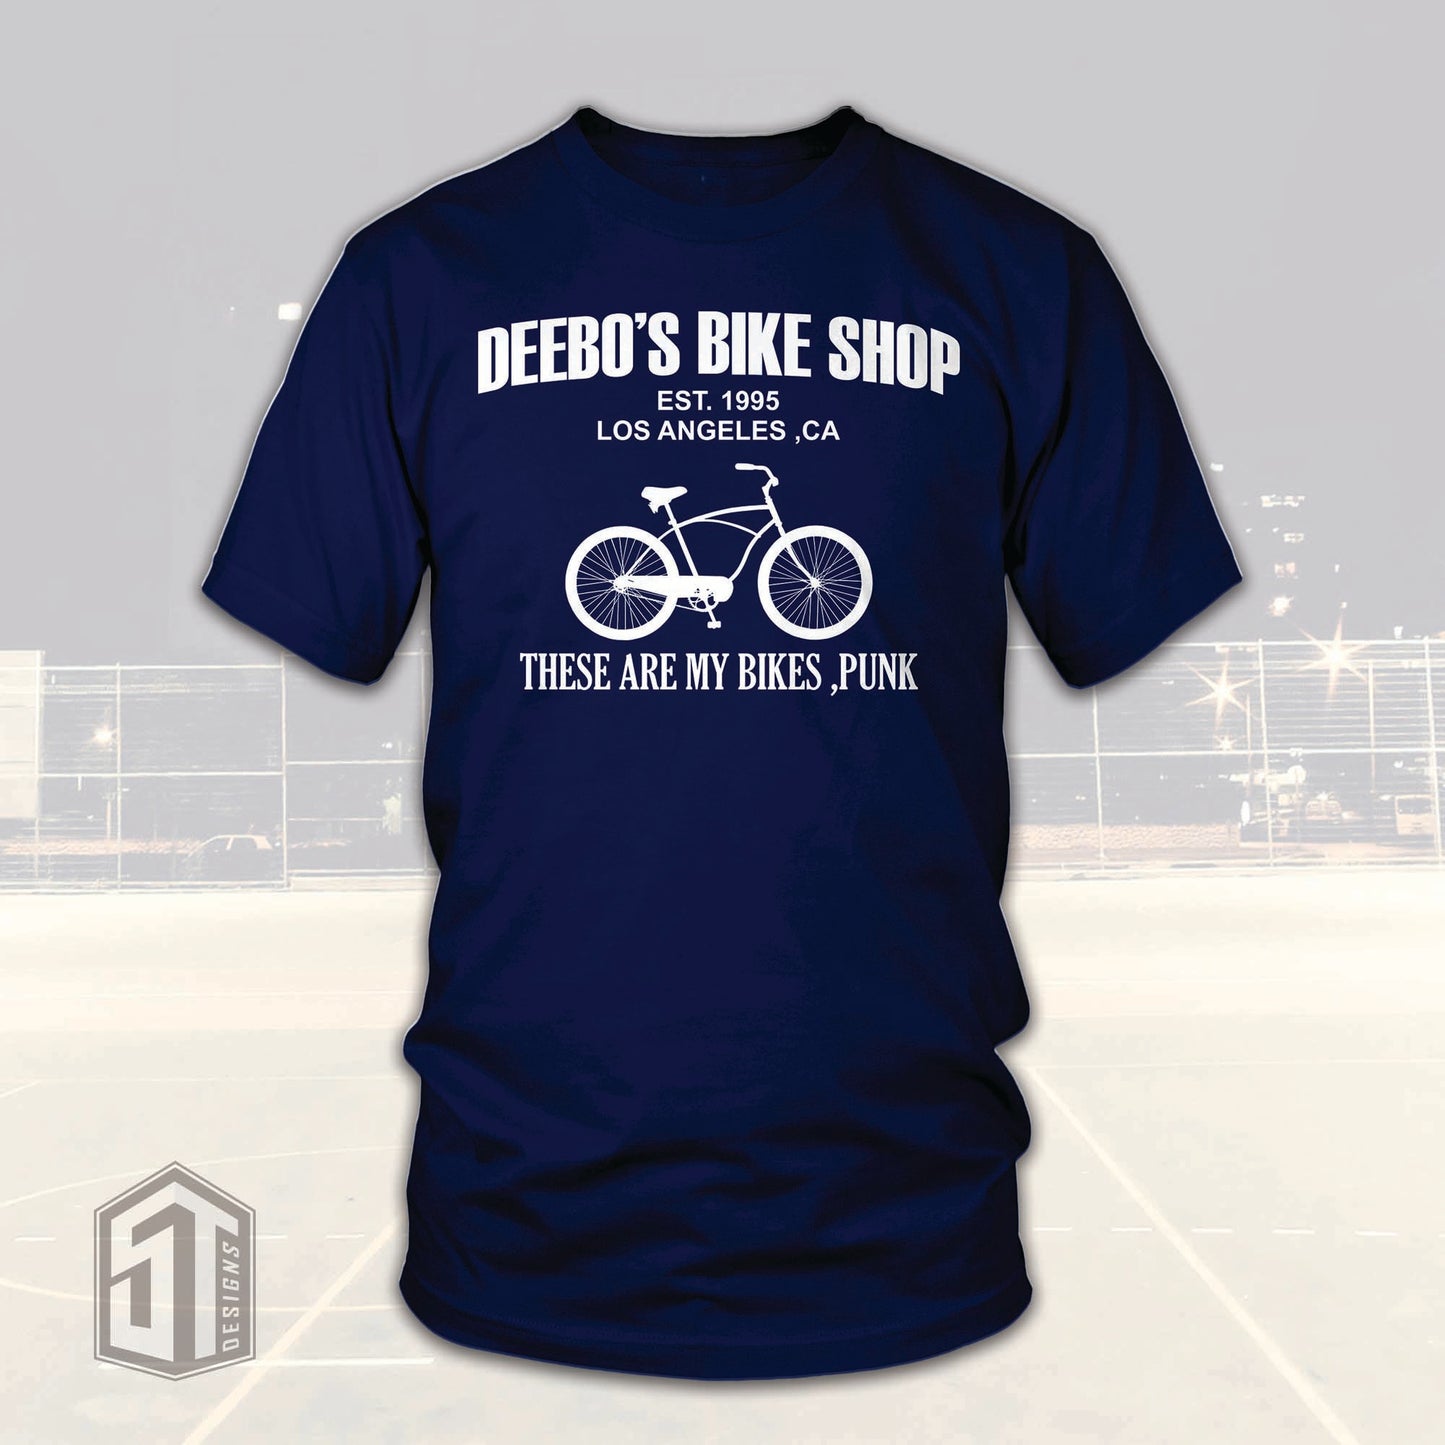 Deebo's Bike Shop Tee